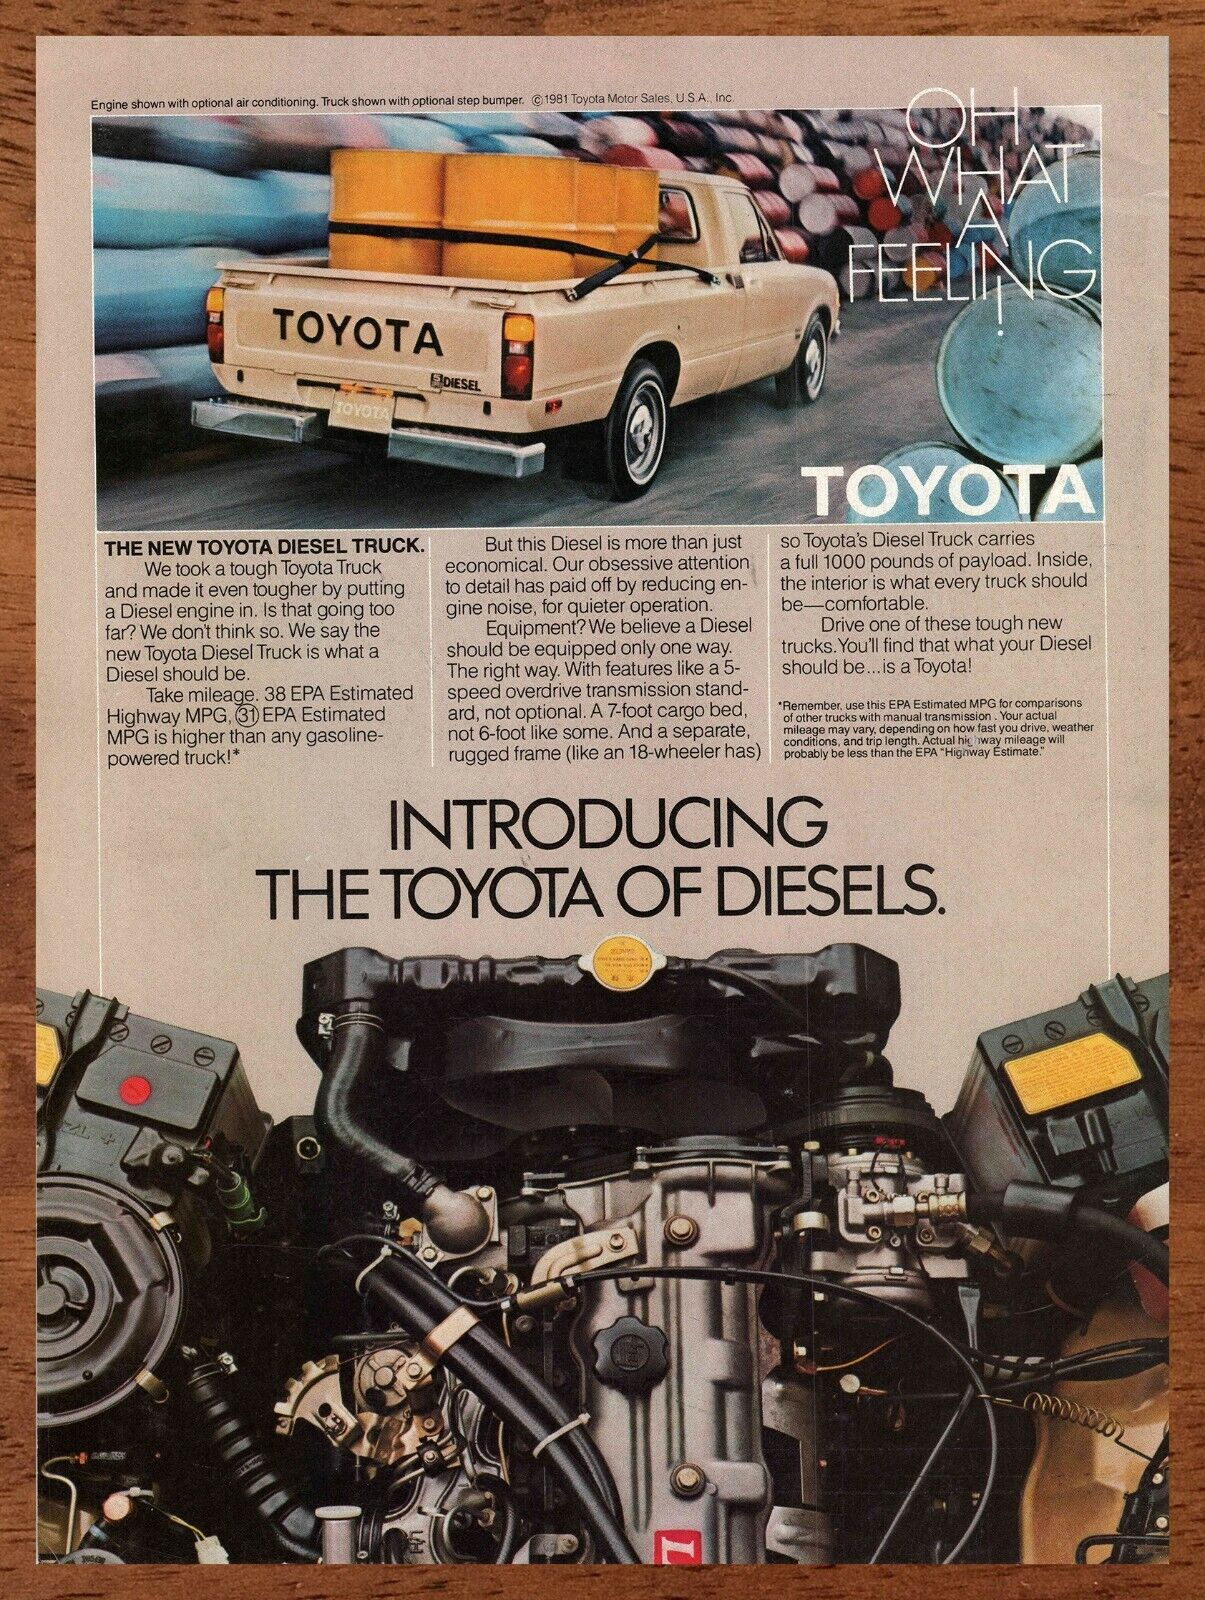 1981 Toyota Diesel Engine Vintage Print Ad/Poster 80s Car Truck Bar Art Décor 